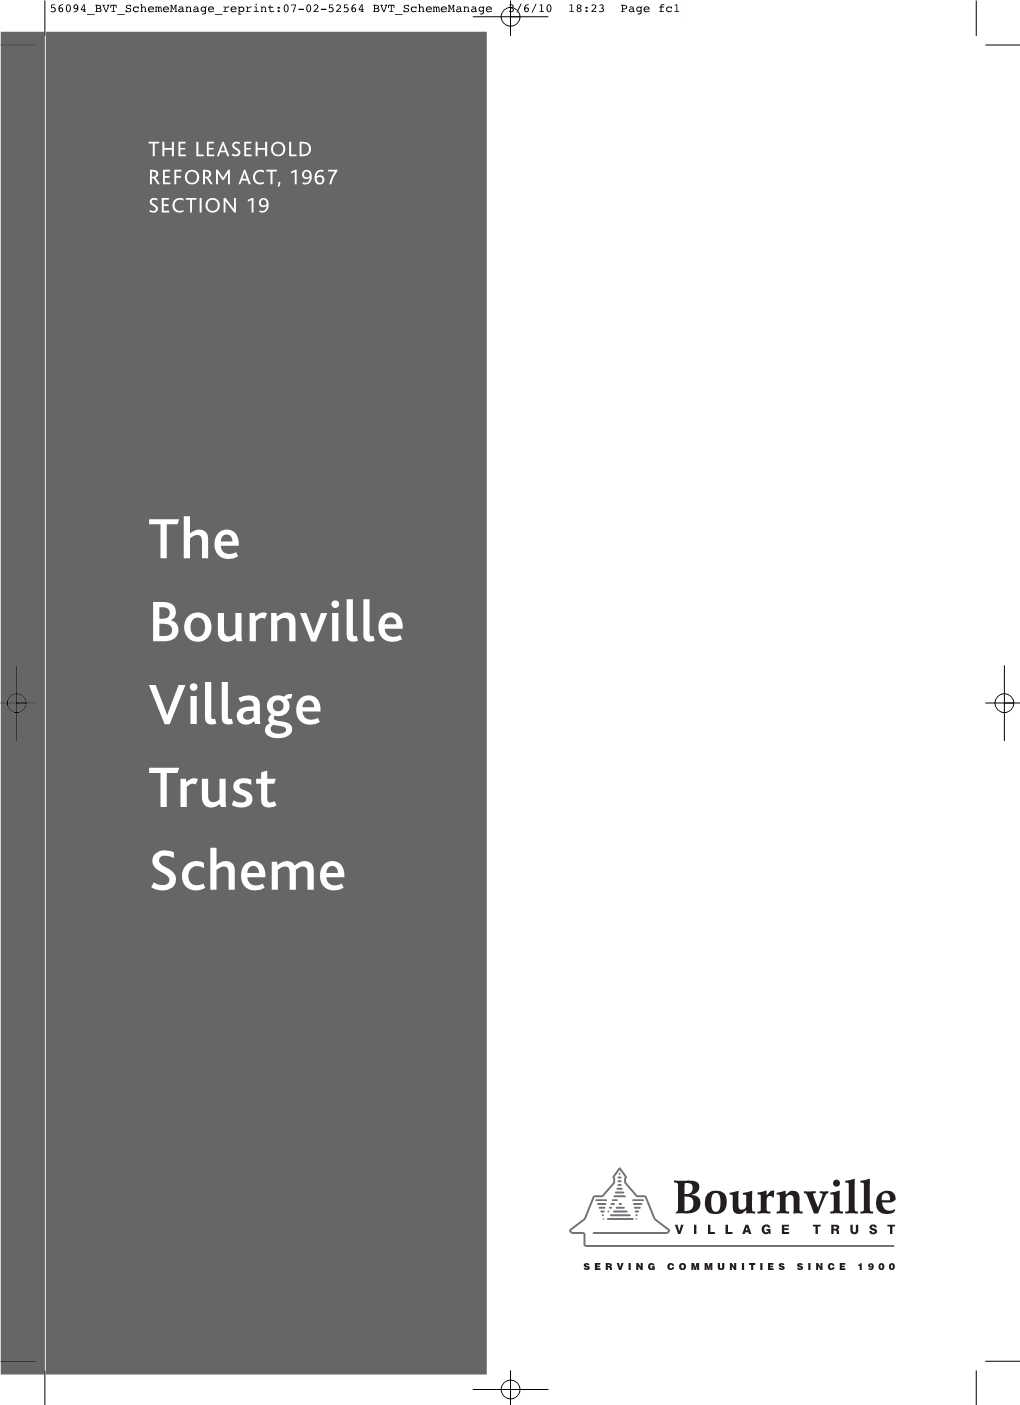 Bournville Estate Scheme of Management Guide